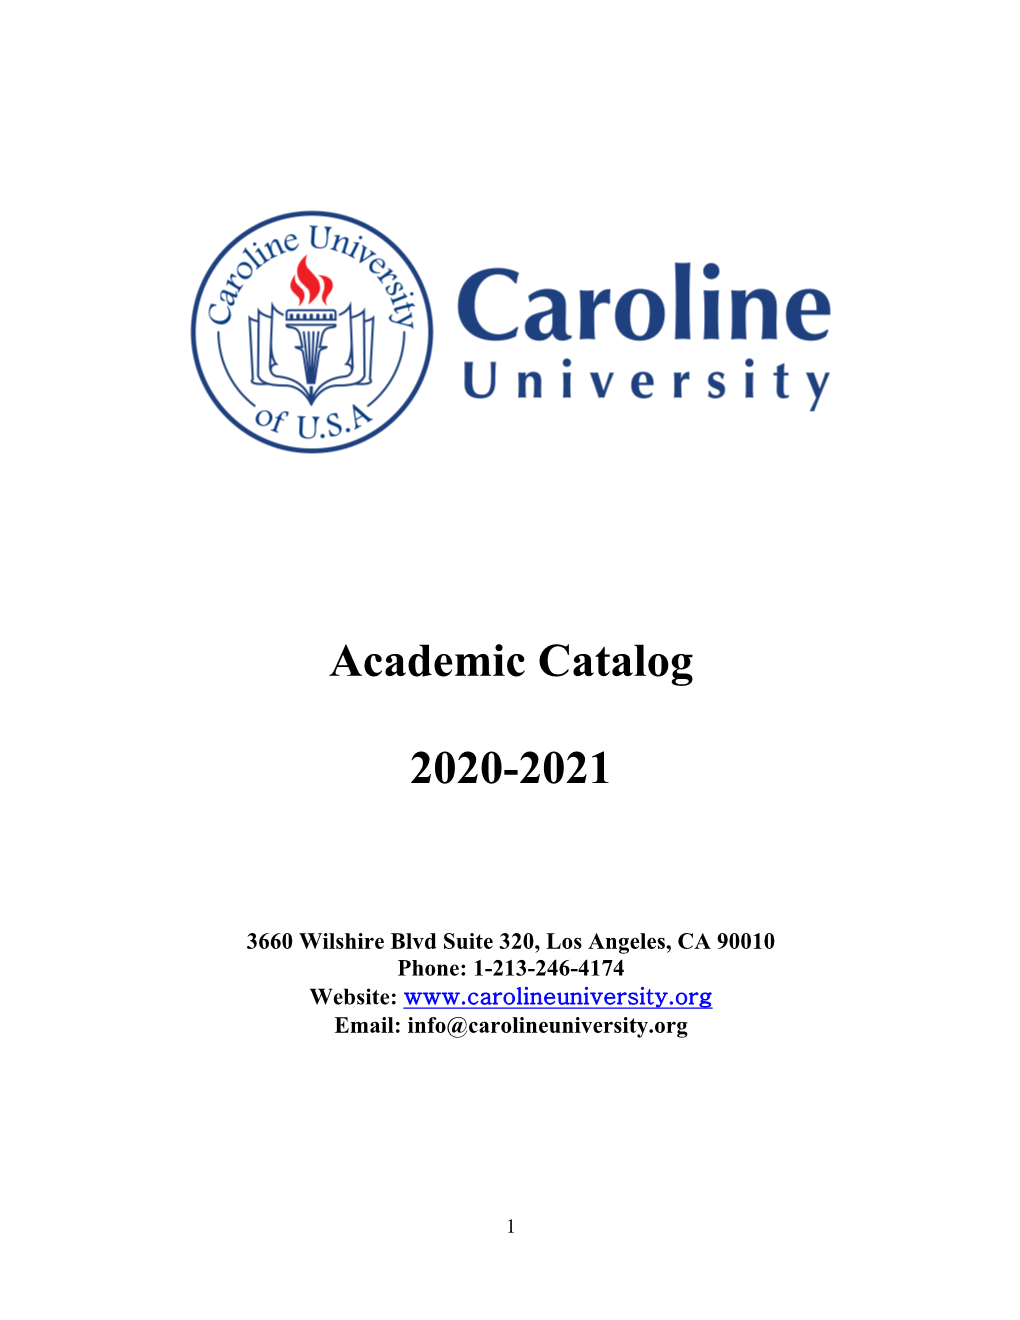 Academic Catalog 2020-2021